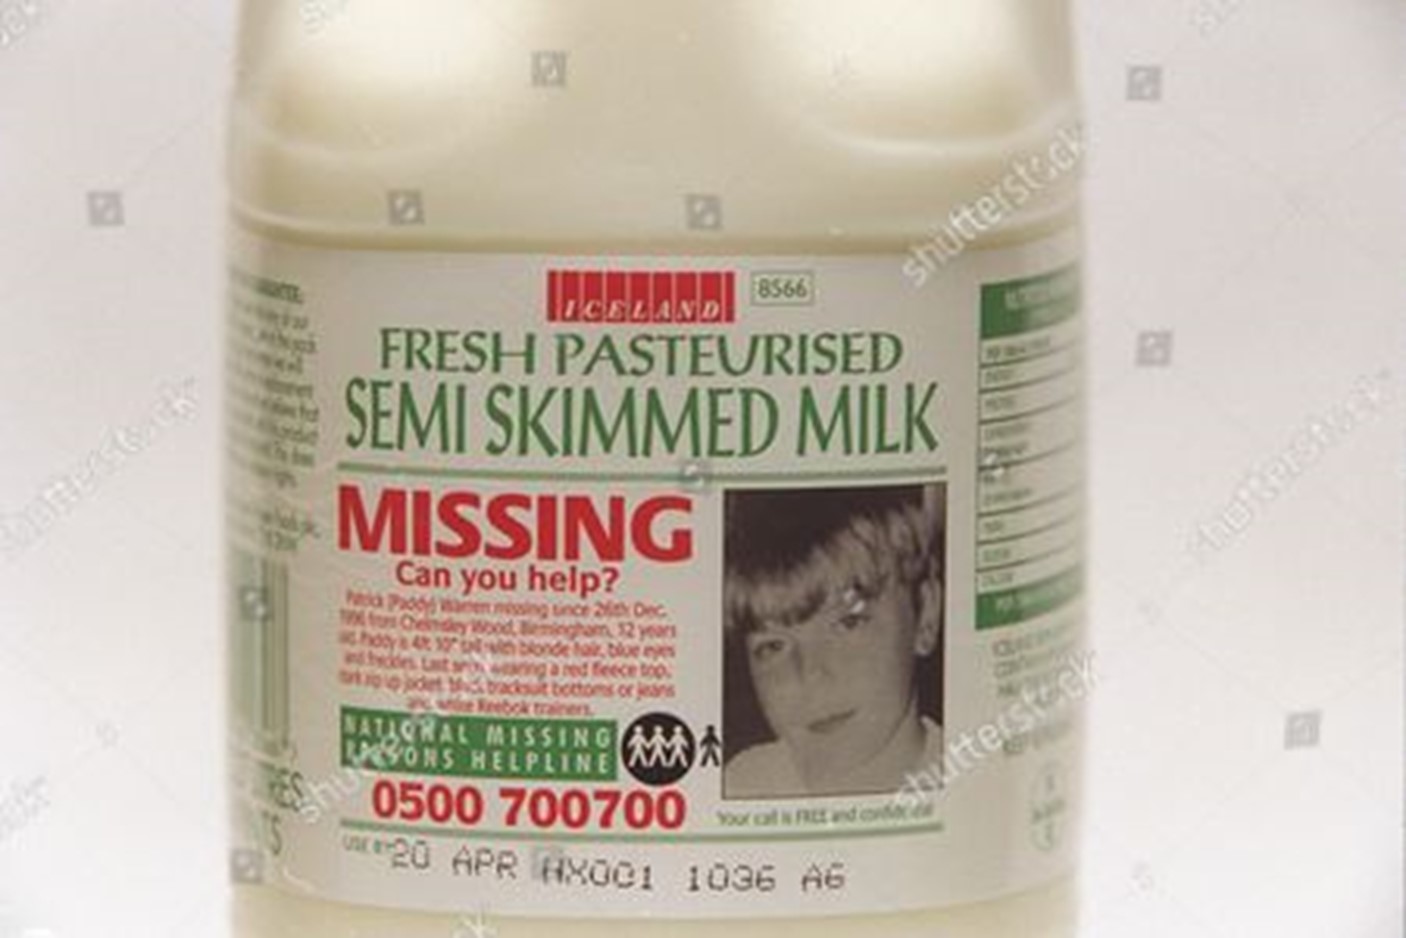 appeal for missing child on a milk bottle